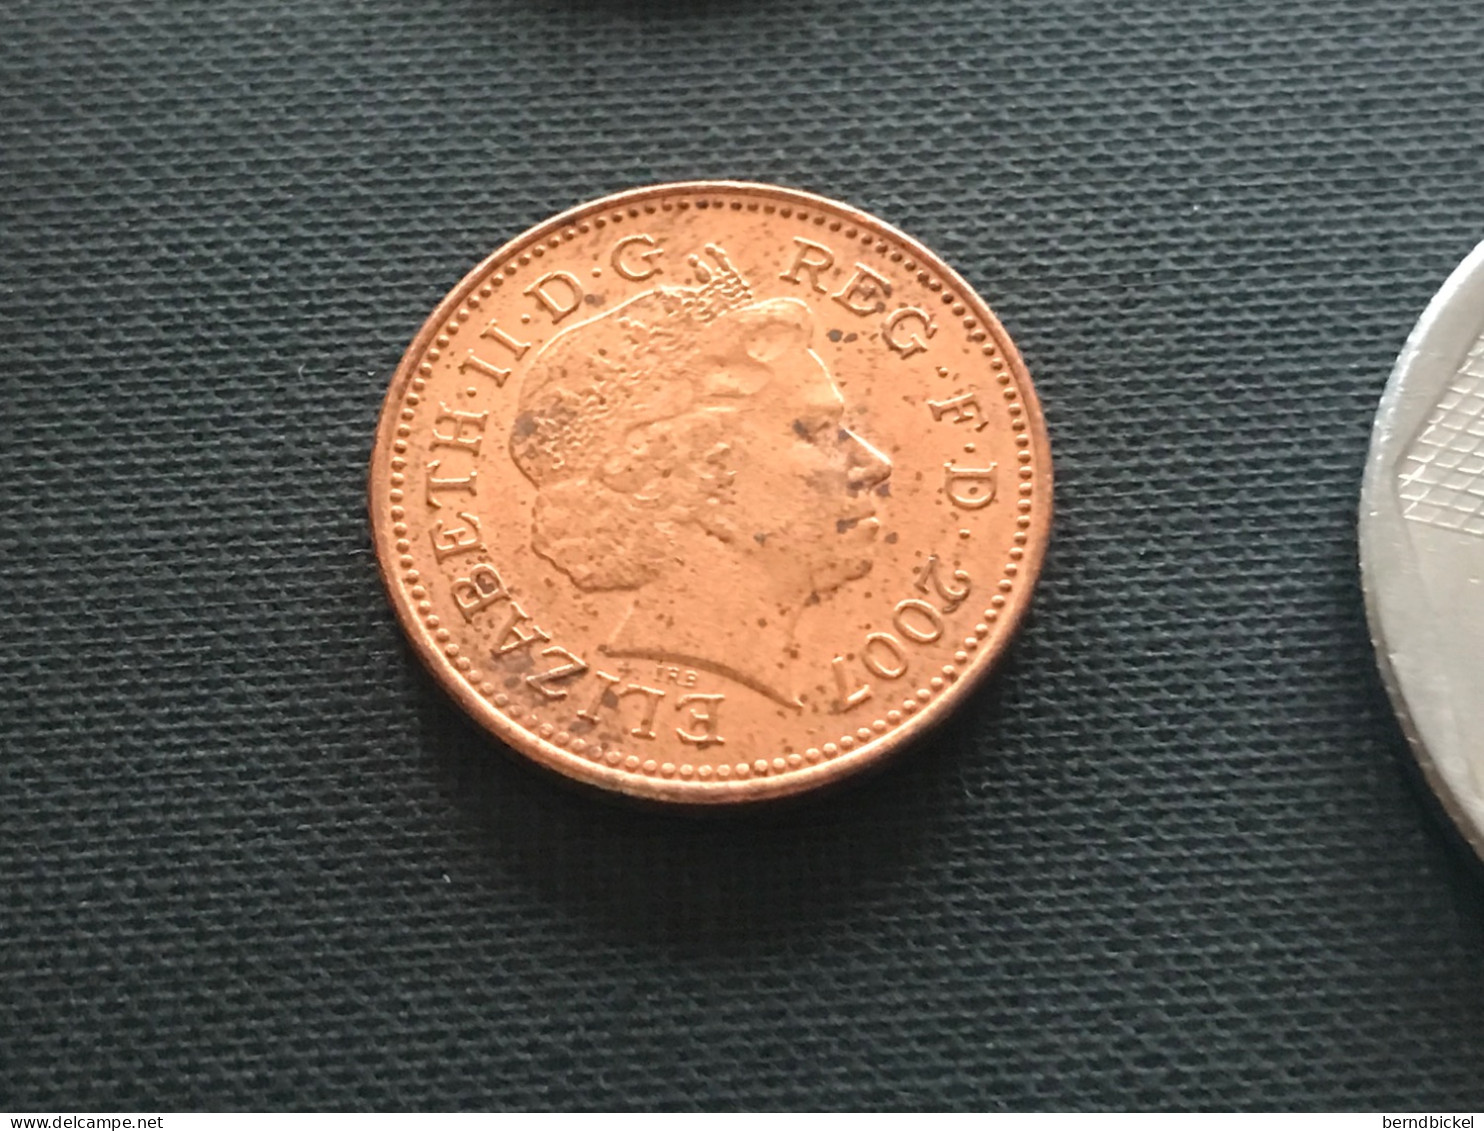 Münze Münzen Umlaufmünze Großbritannien 1 Penny 2007 - 1 Penny & 1 New Penny